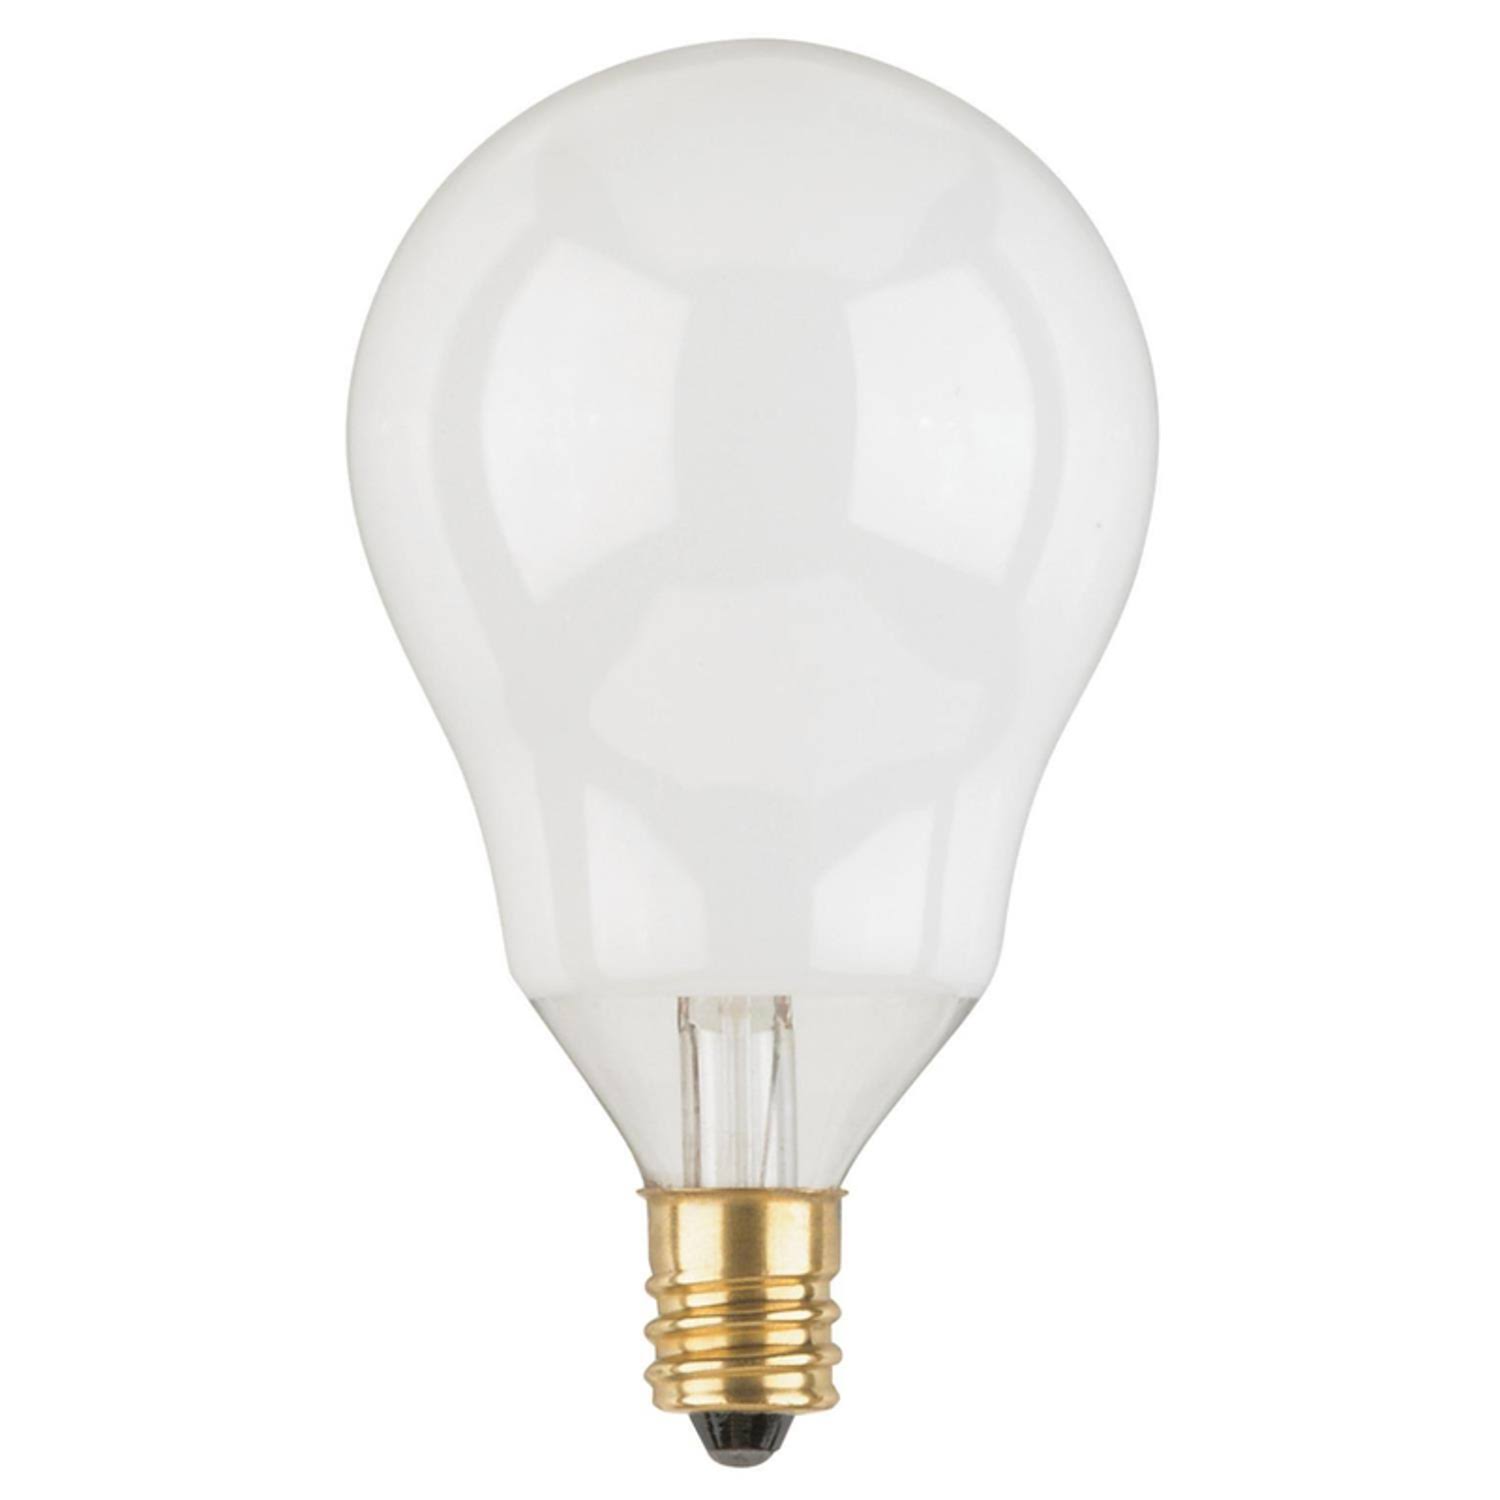 Westinghouse Light Bulbs, Incandescent, Soft White, 60 Watts, 2 Pack - 2 light bulbs